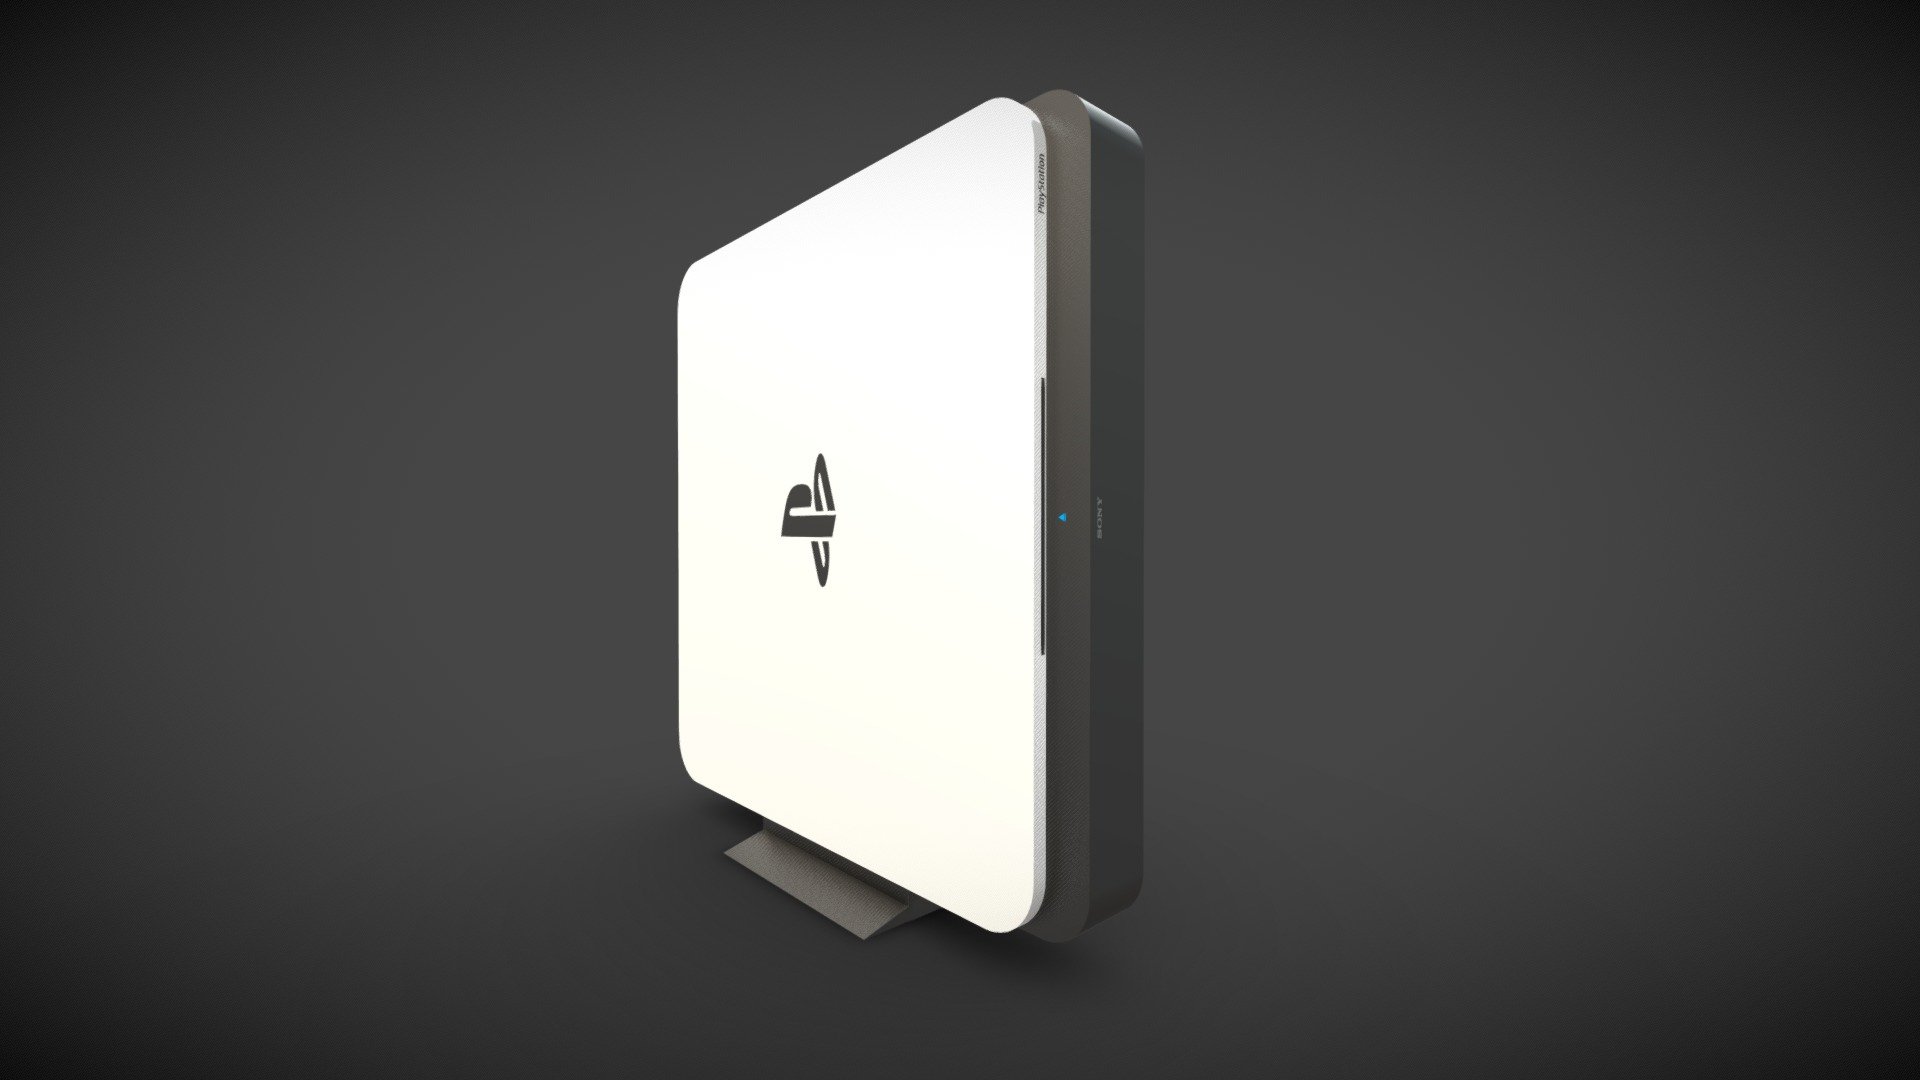 Sony PlayStation 5 Slim Pre 3D model download